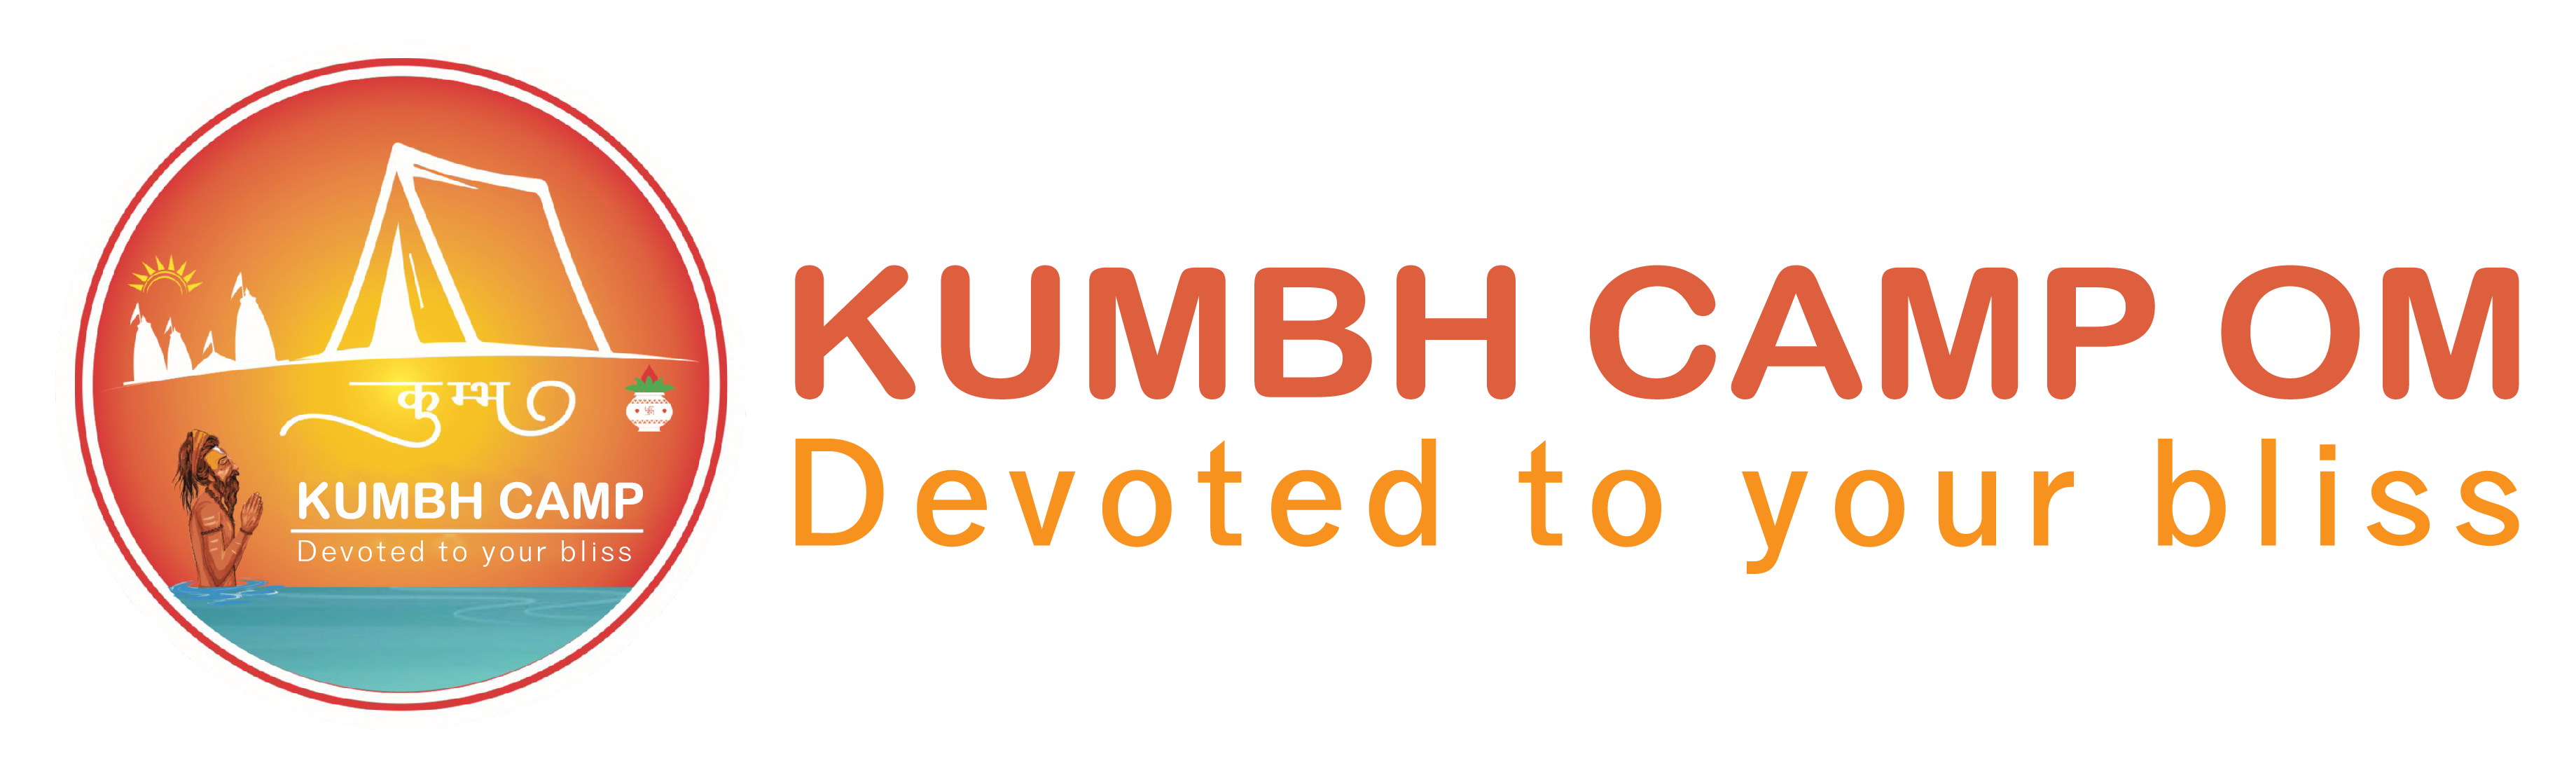 Kumbh Camp Om